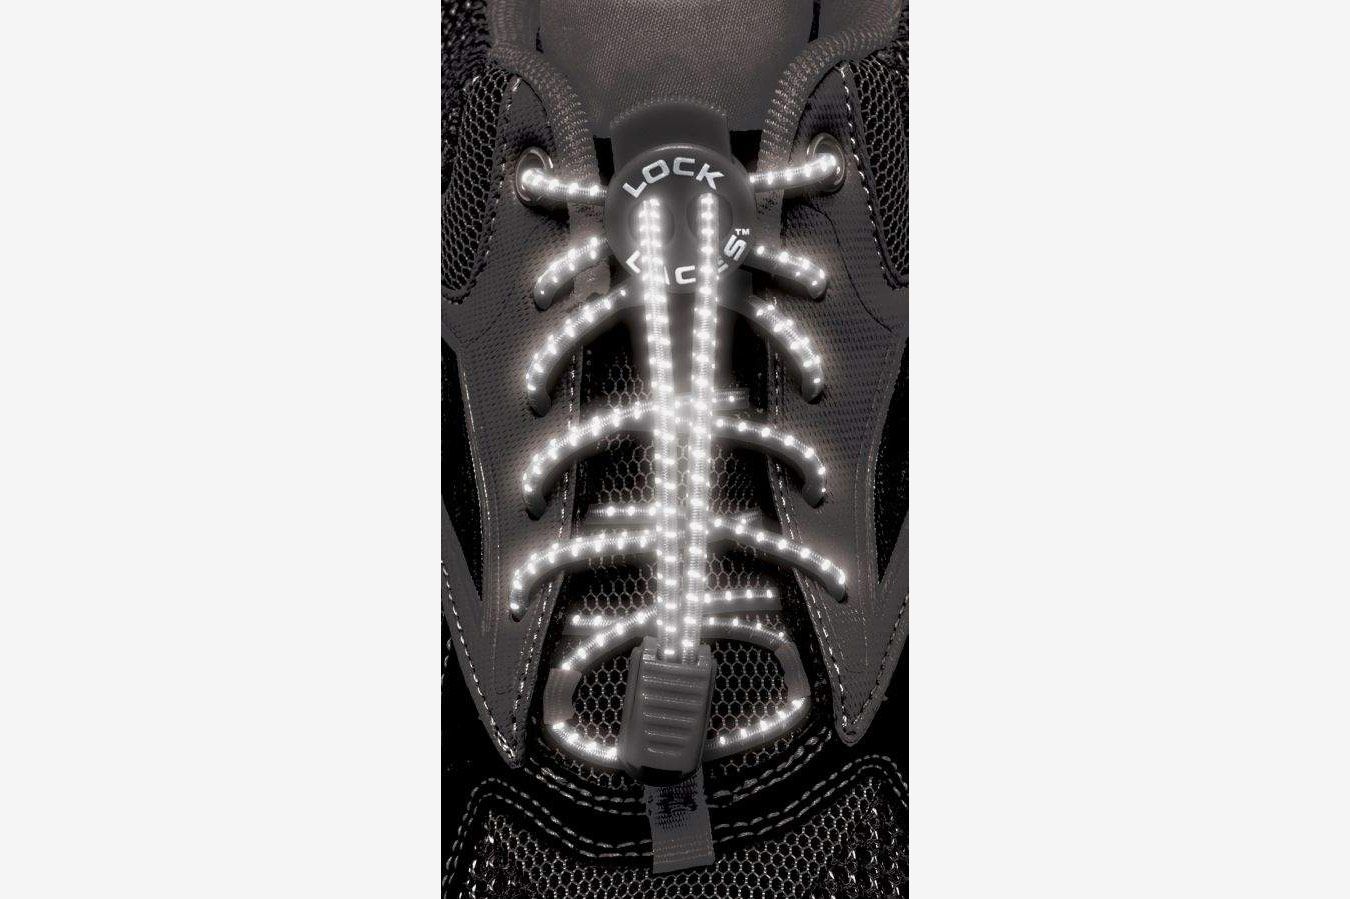 Jogo Grips Reflective Shoe lace locks at .com